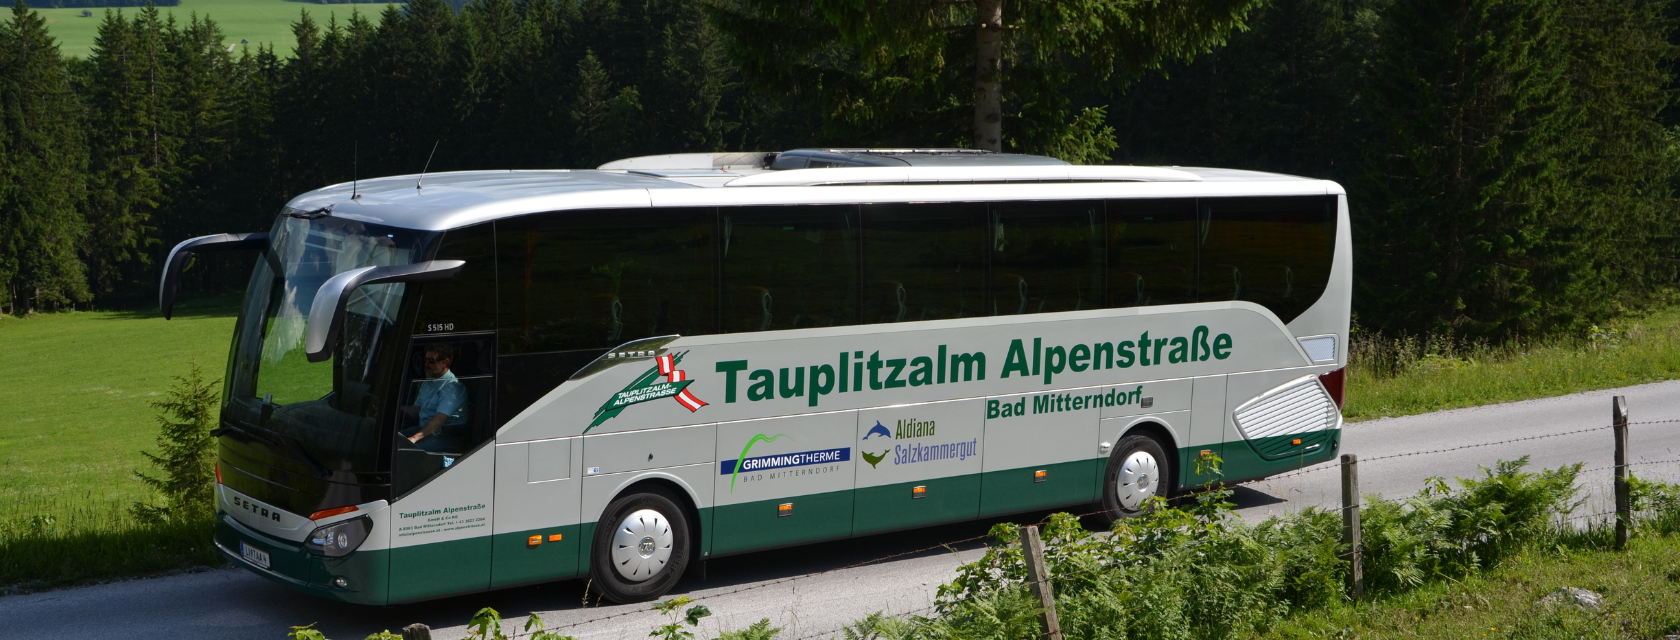 Tauplitzalm Alpenstraße | © Tauplitzalm Alpenstraße GmbH & KG